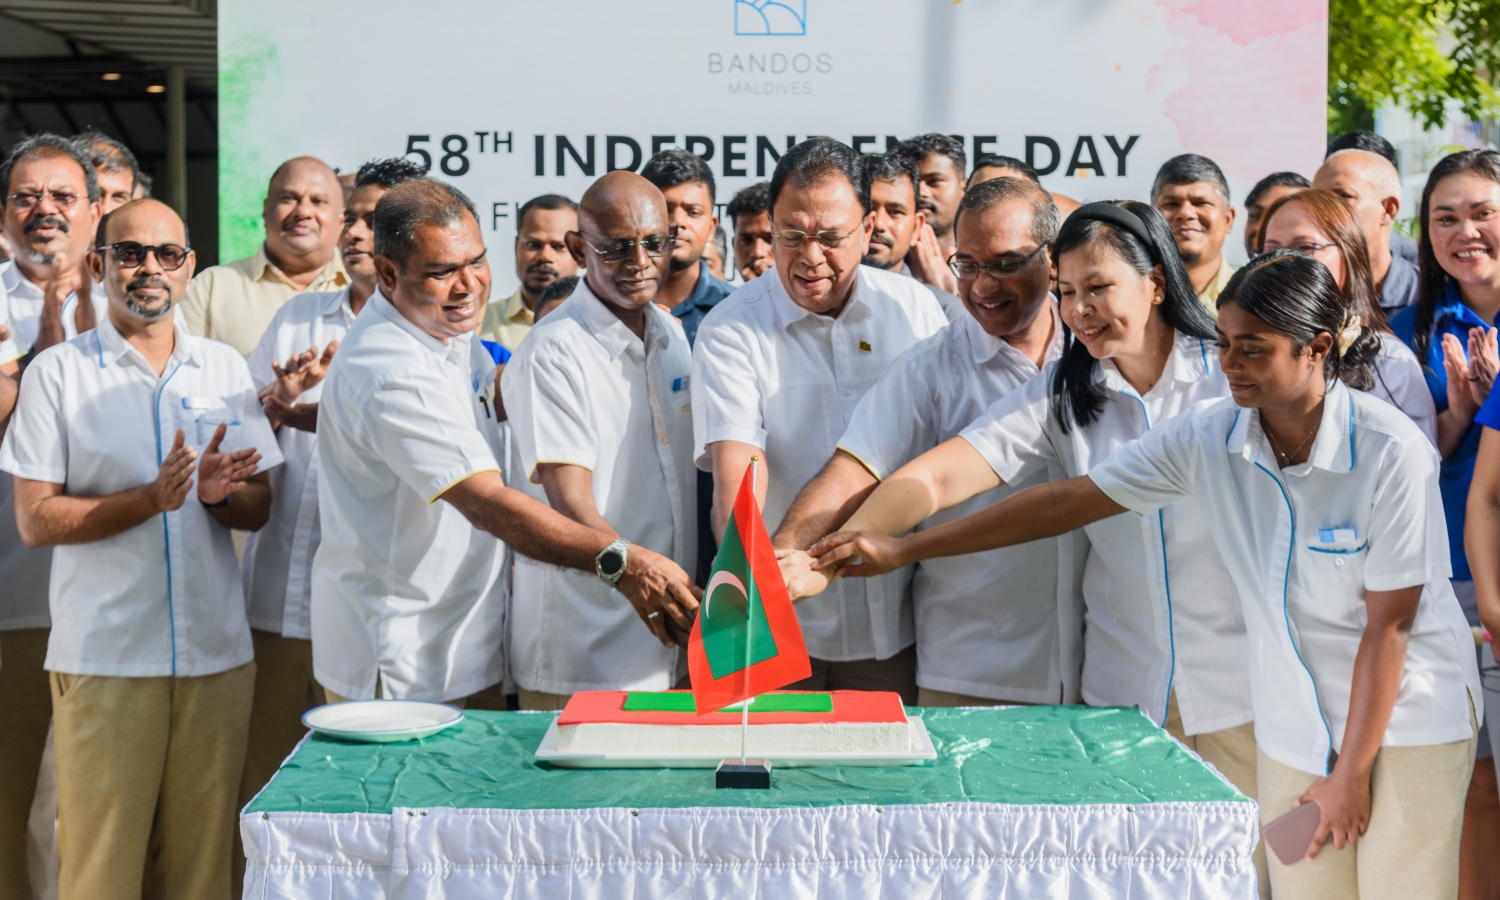 Bandos marks Maldives’ 58th Independence Day with flag hoisting ceremony – Hotelier Maldives